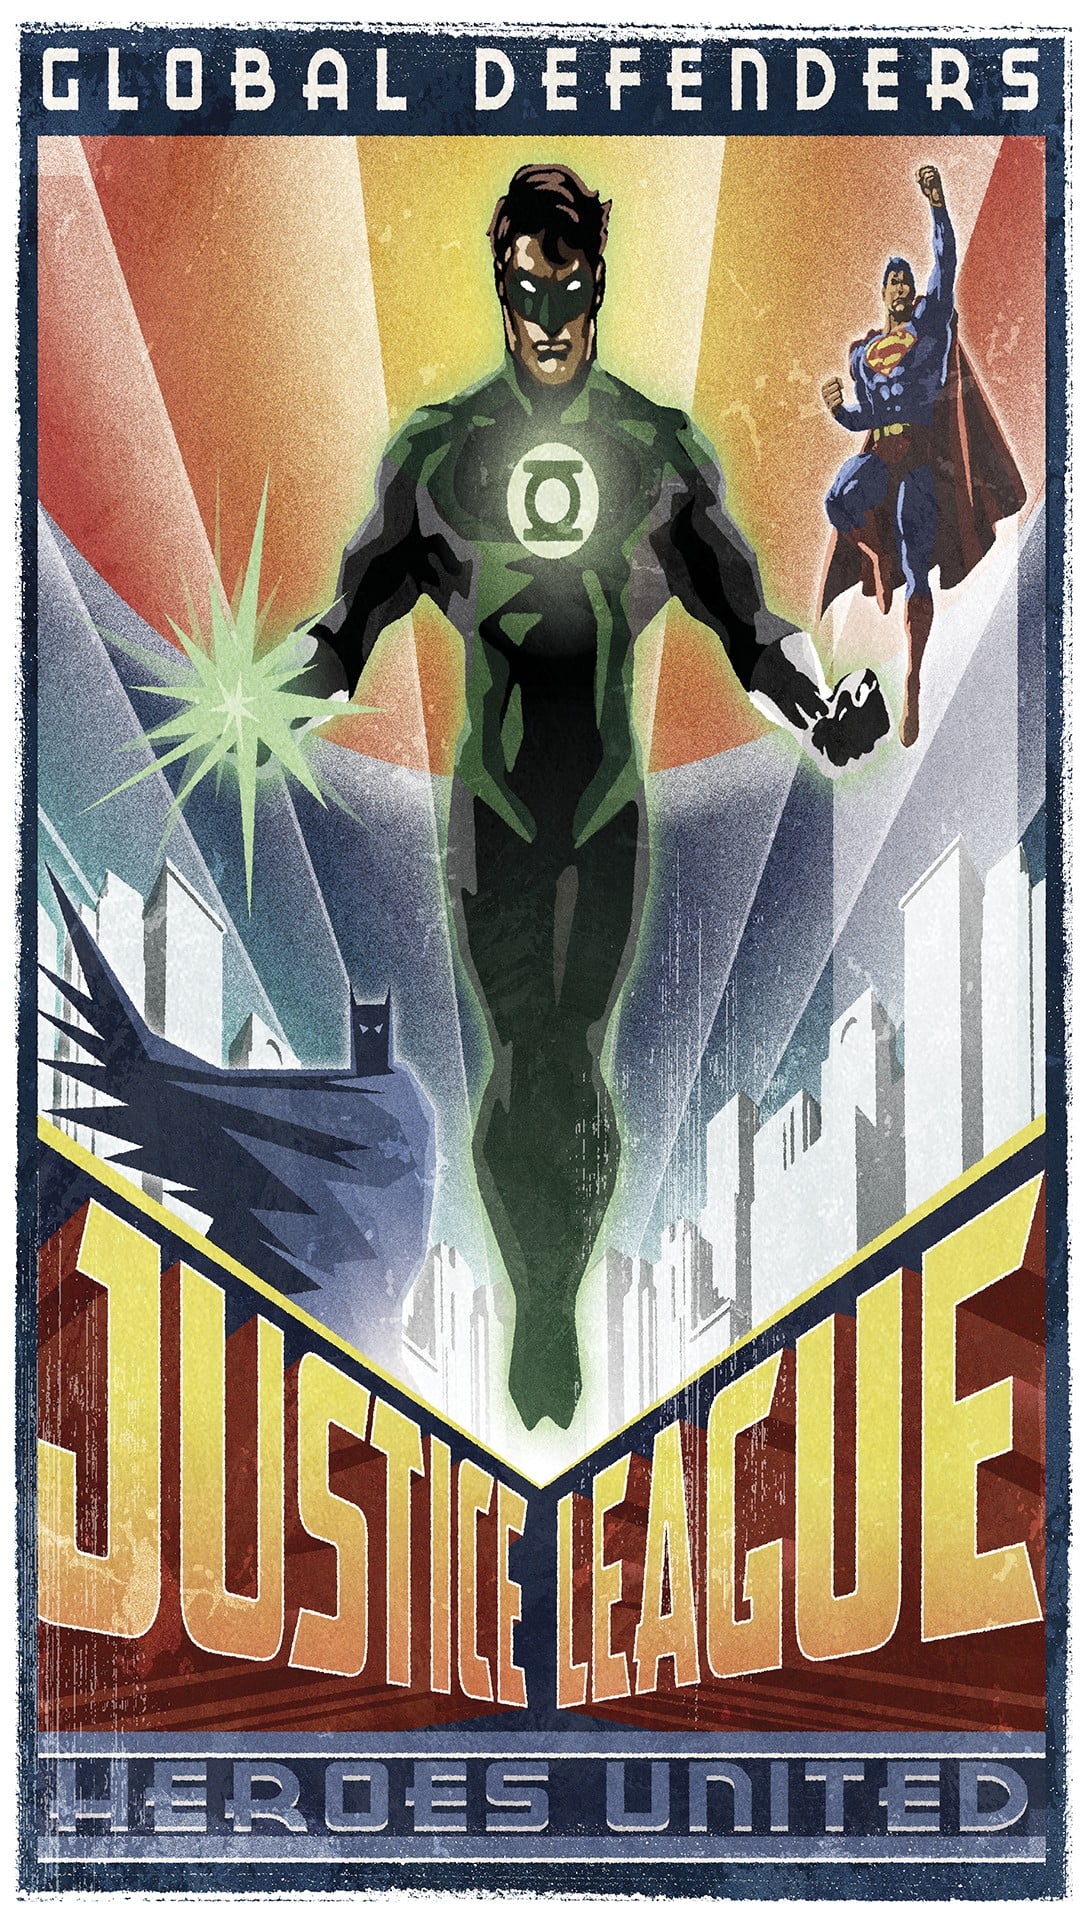 Justice League comic book cover, Justice League, men, Batman logo, Superman